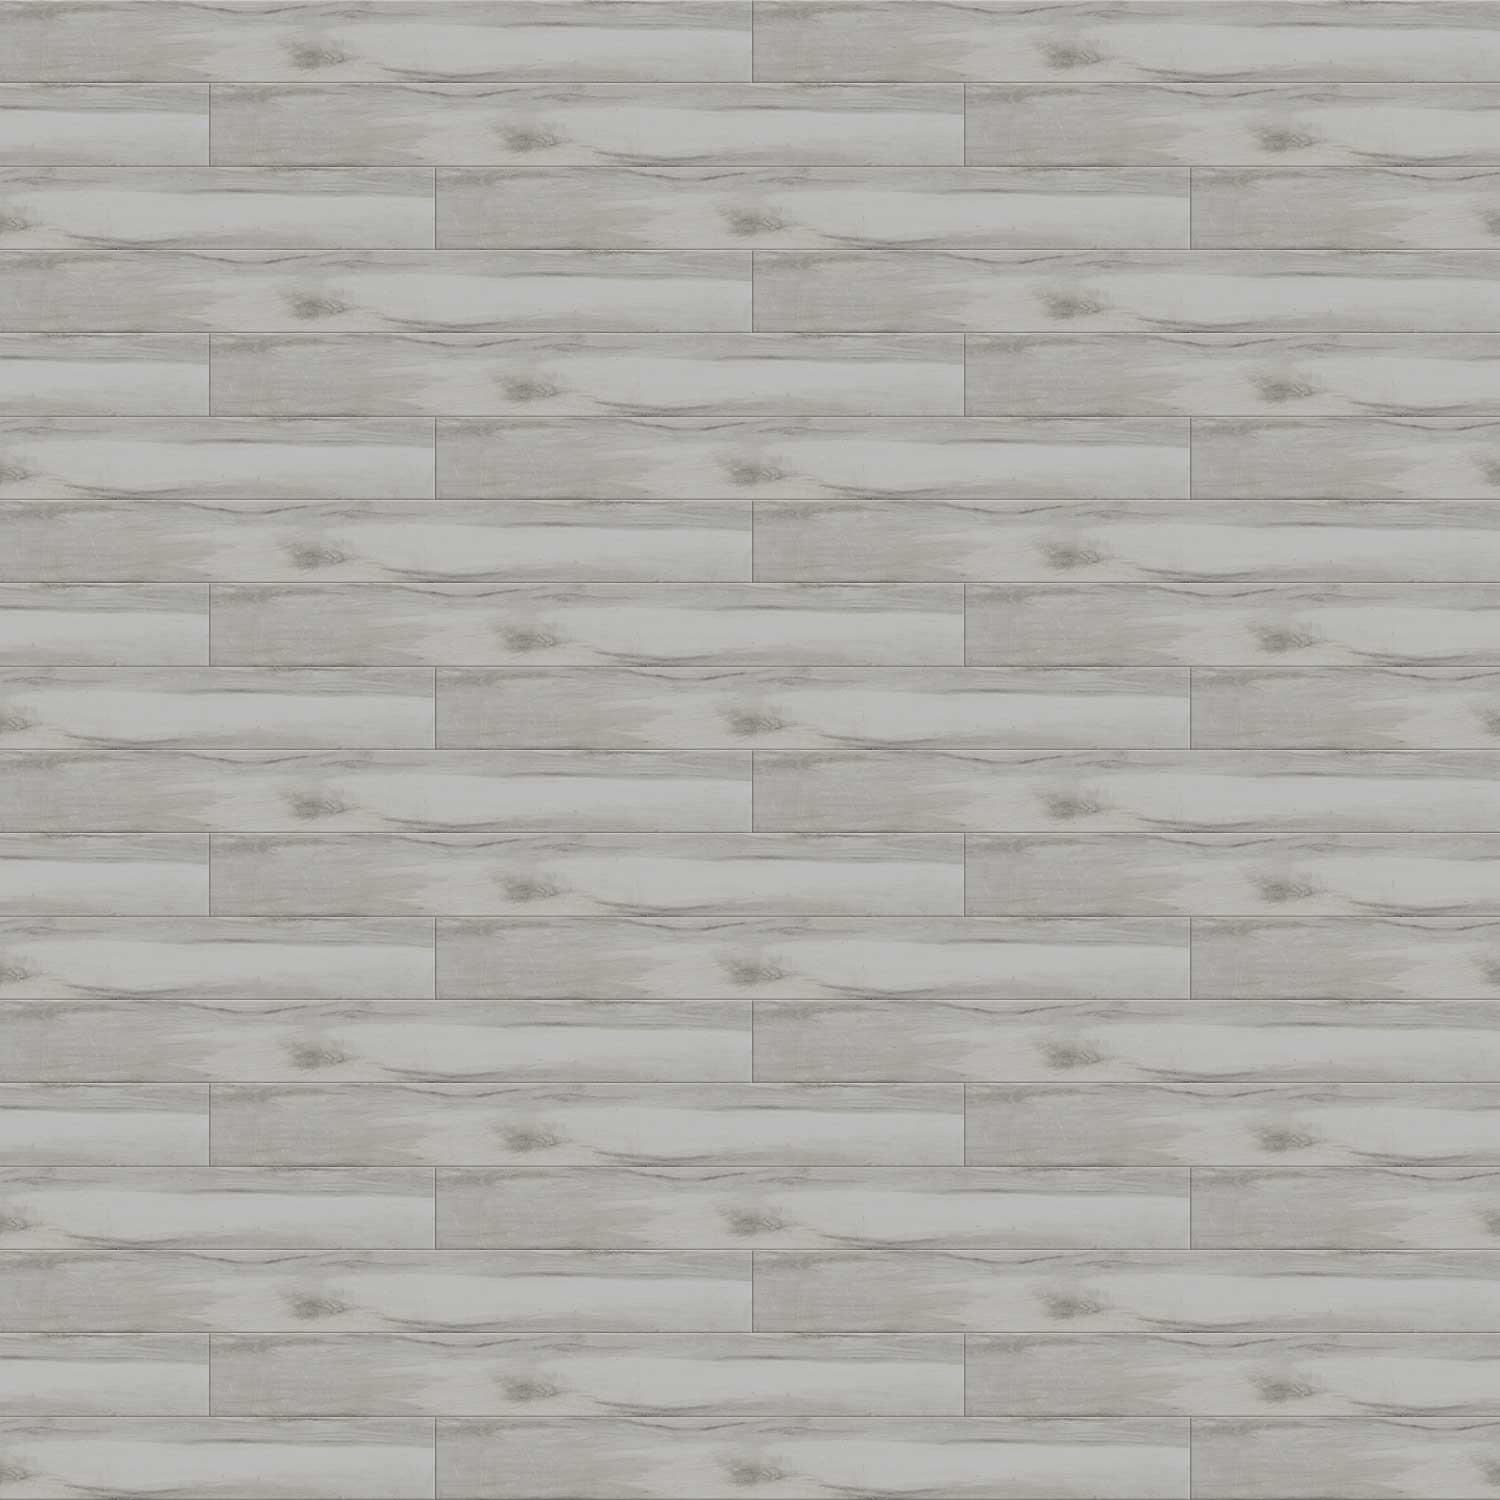 Timber White Porcelain Tile Wood Effect Walls Floor Large 200x1200mm